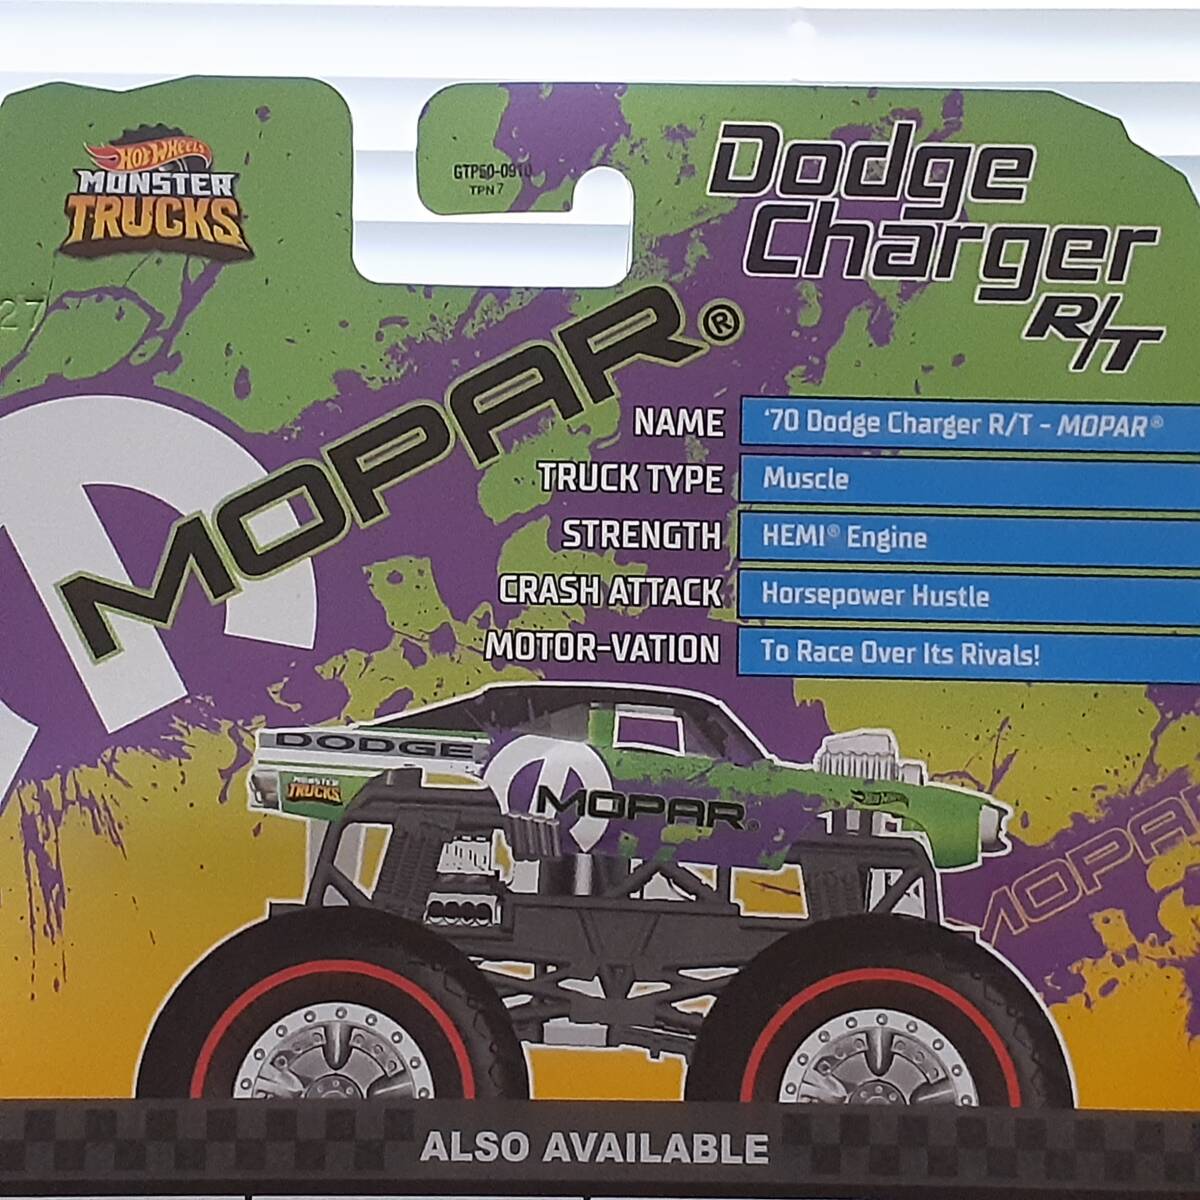 HOT WHeeLs MONSTER TRUKS DODGE CHARGER MOPAR KROGER EXCLUSIVE ダッジ チャージャー ミニカー クローガー 限定 日本未発売 モパー_画像10